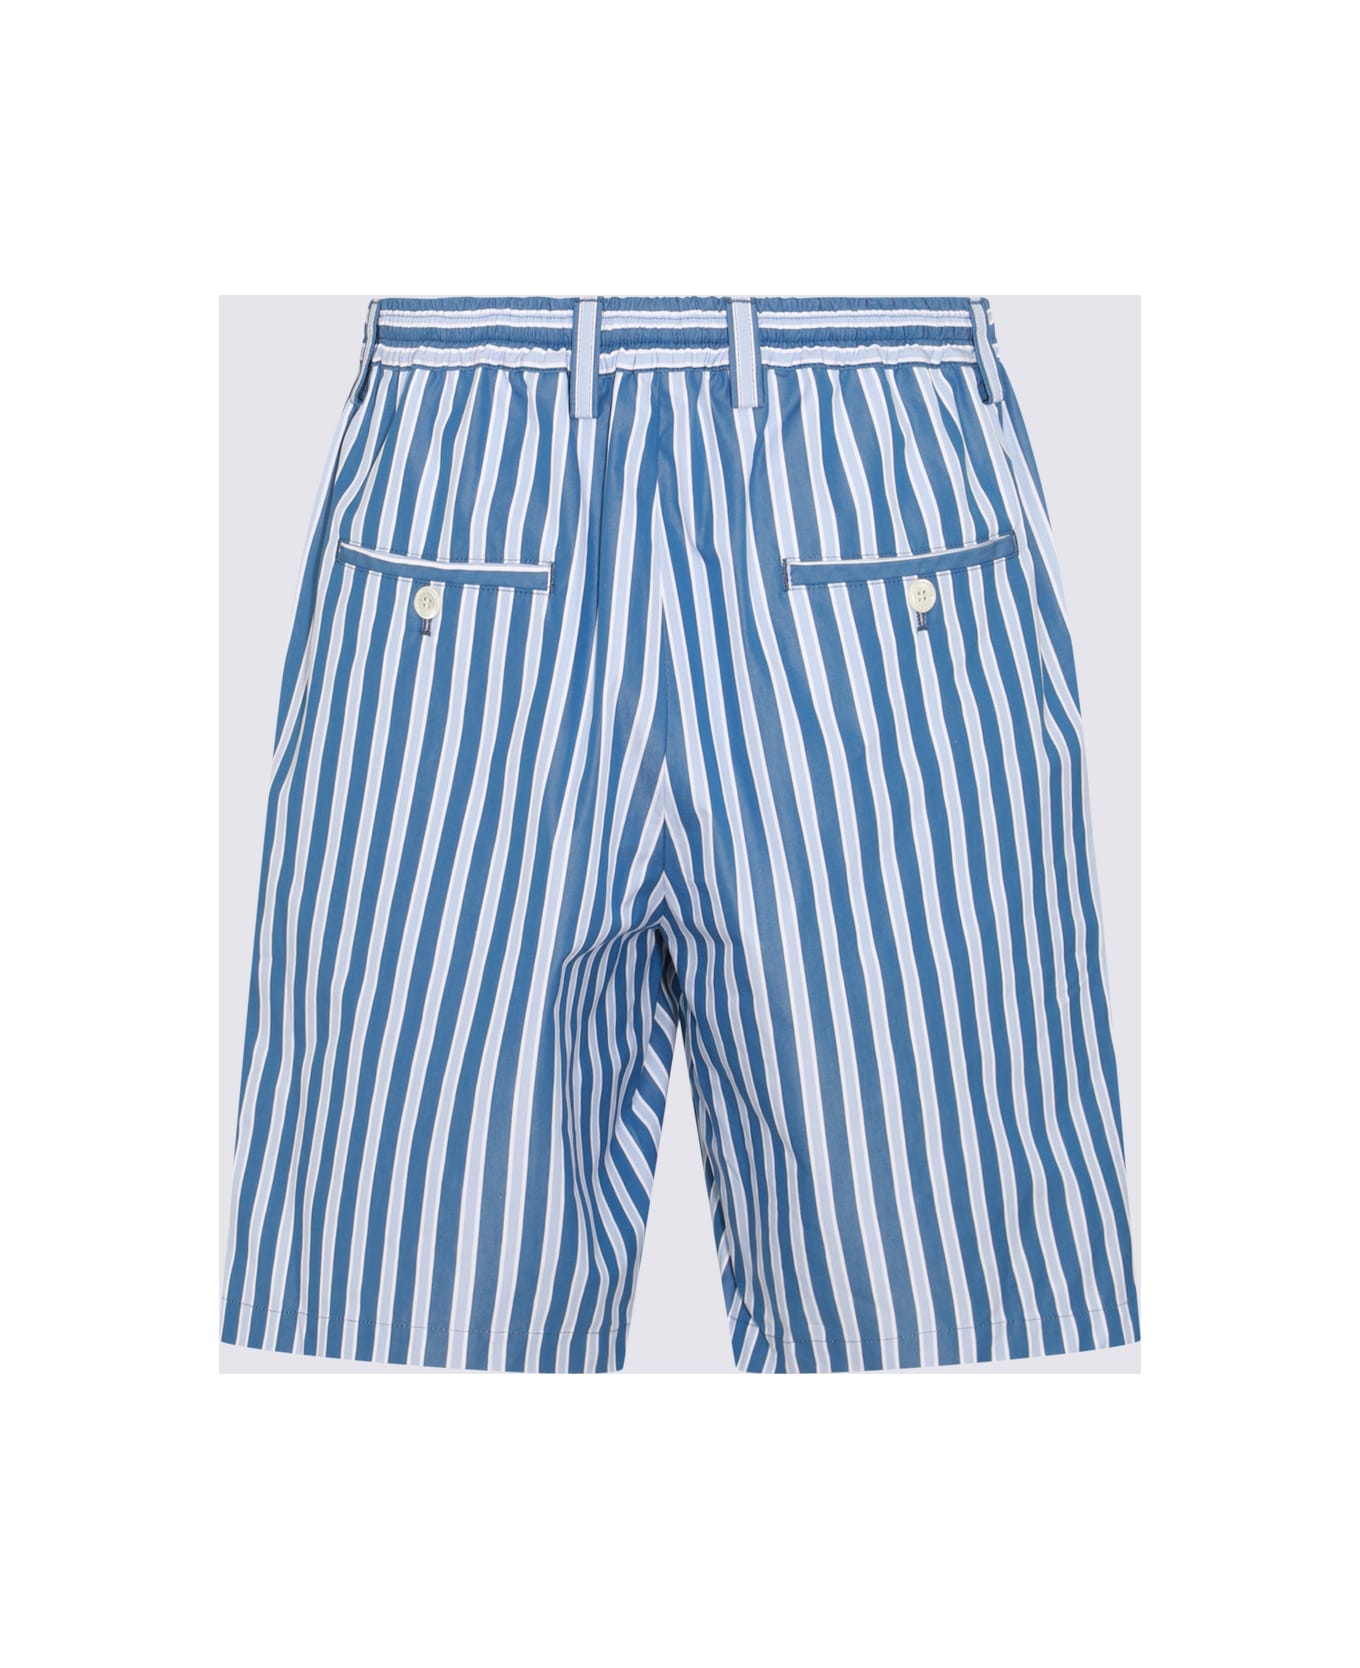 Marni White And Light Blue Cotton Shorts - OPAL